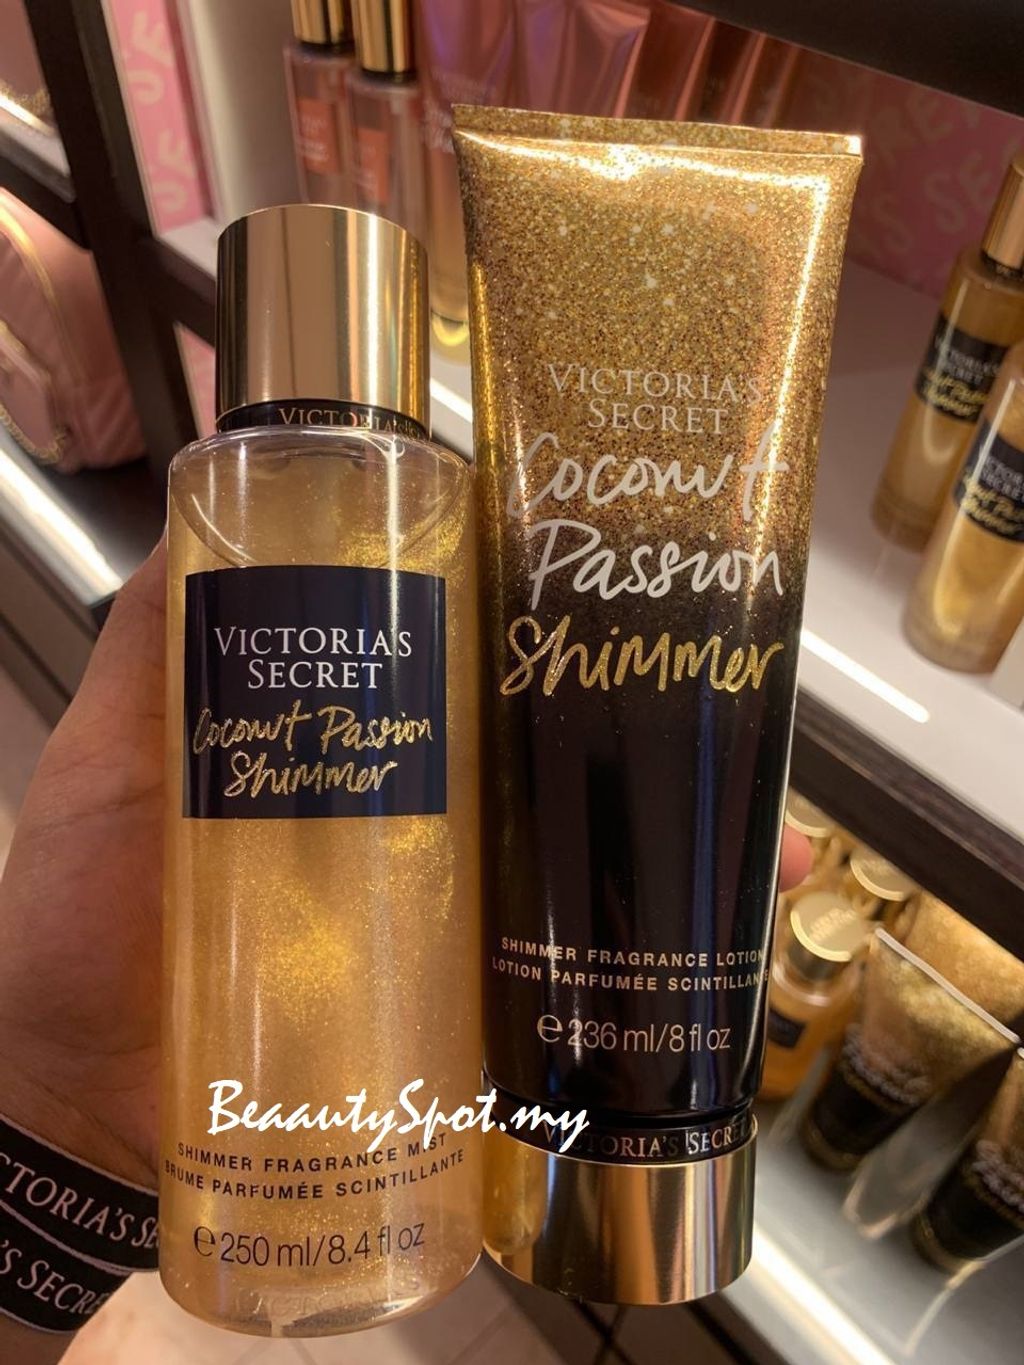 Victoria's Secret Coconut Passion Fragrance Body Lotion for Women, 8 Oz 